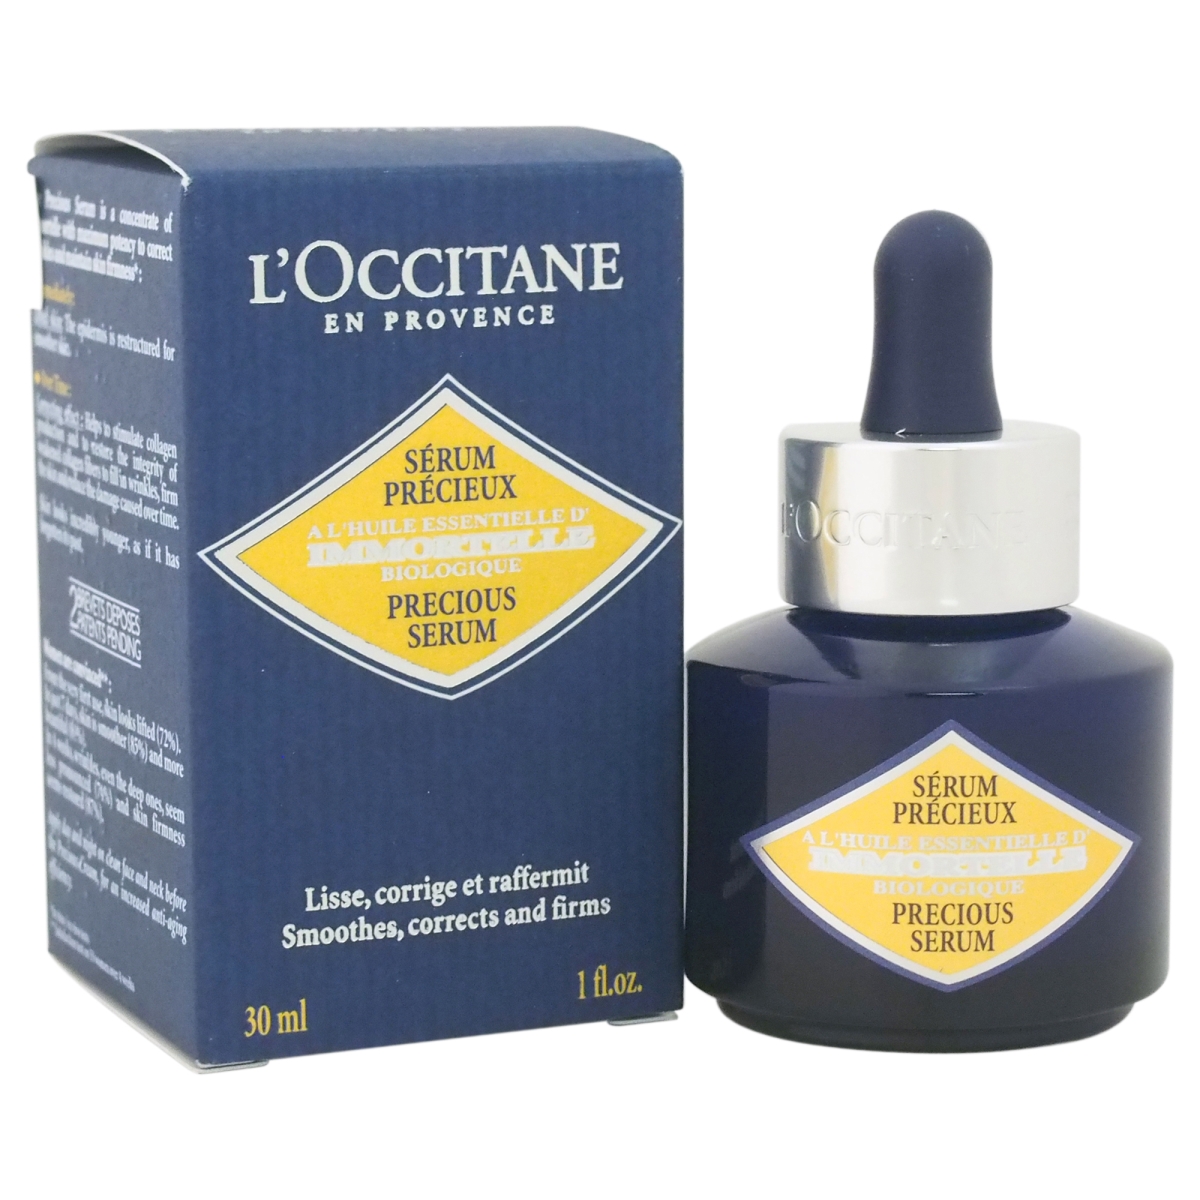 W-SC-2512 1 oz Immortelle Precious Serum for Women -  Loccitane